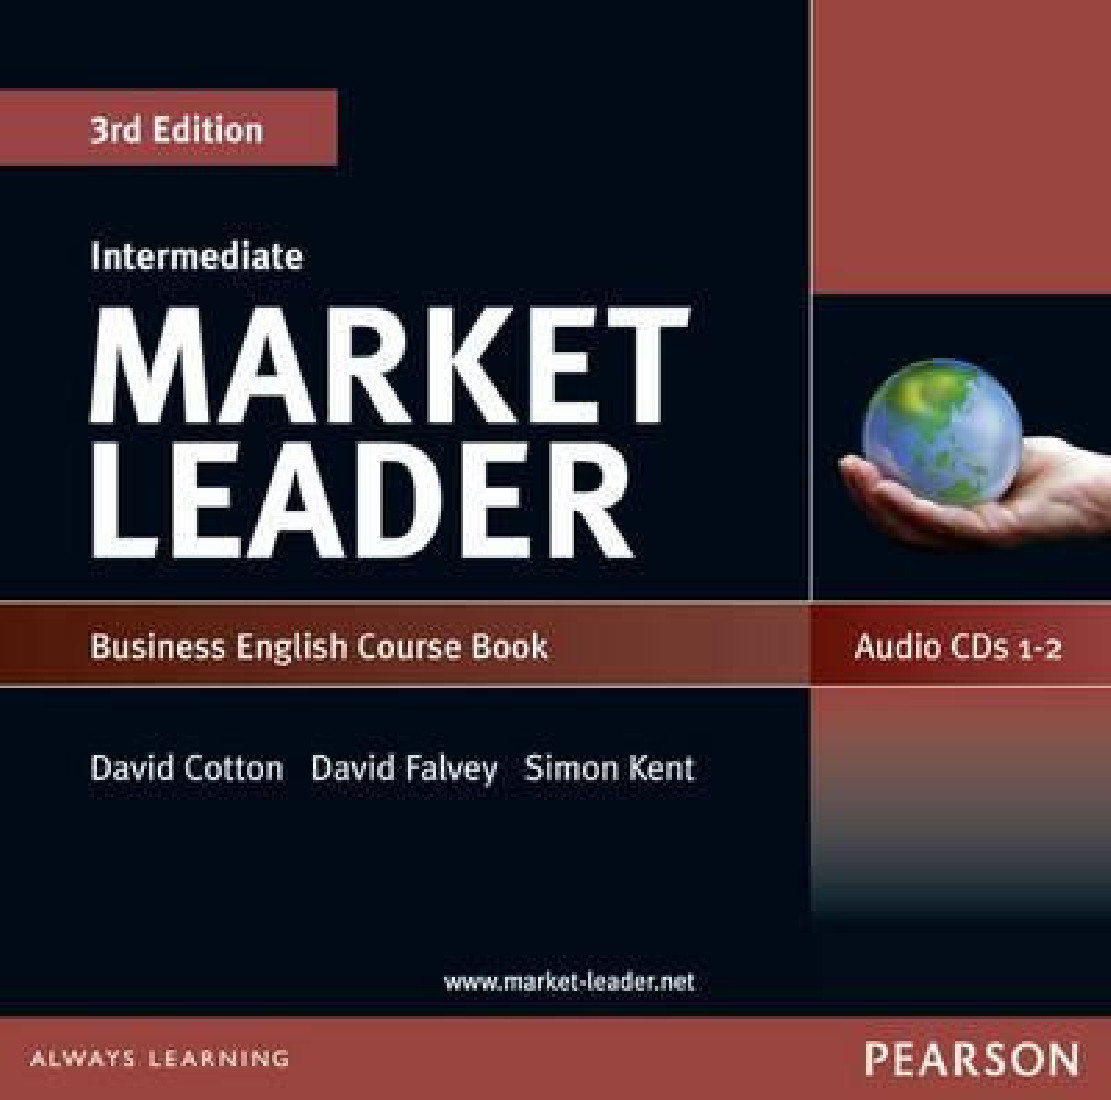 Marketing leader new edition. Market leader (3rd Edition) Intermediate Coursebook ключи. Market leader Intermediate 3ed. Market leader Coursebook David Cotton. Market leader Intermediate 3rd Edition.